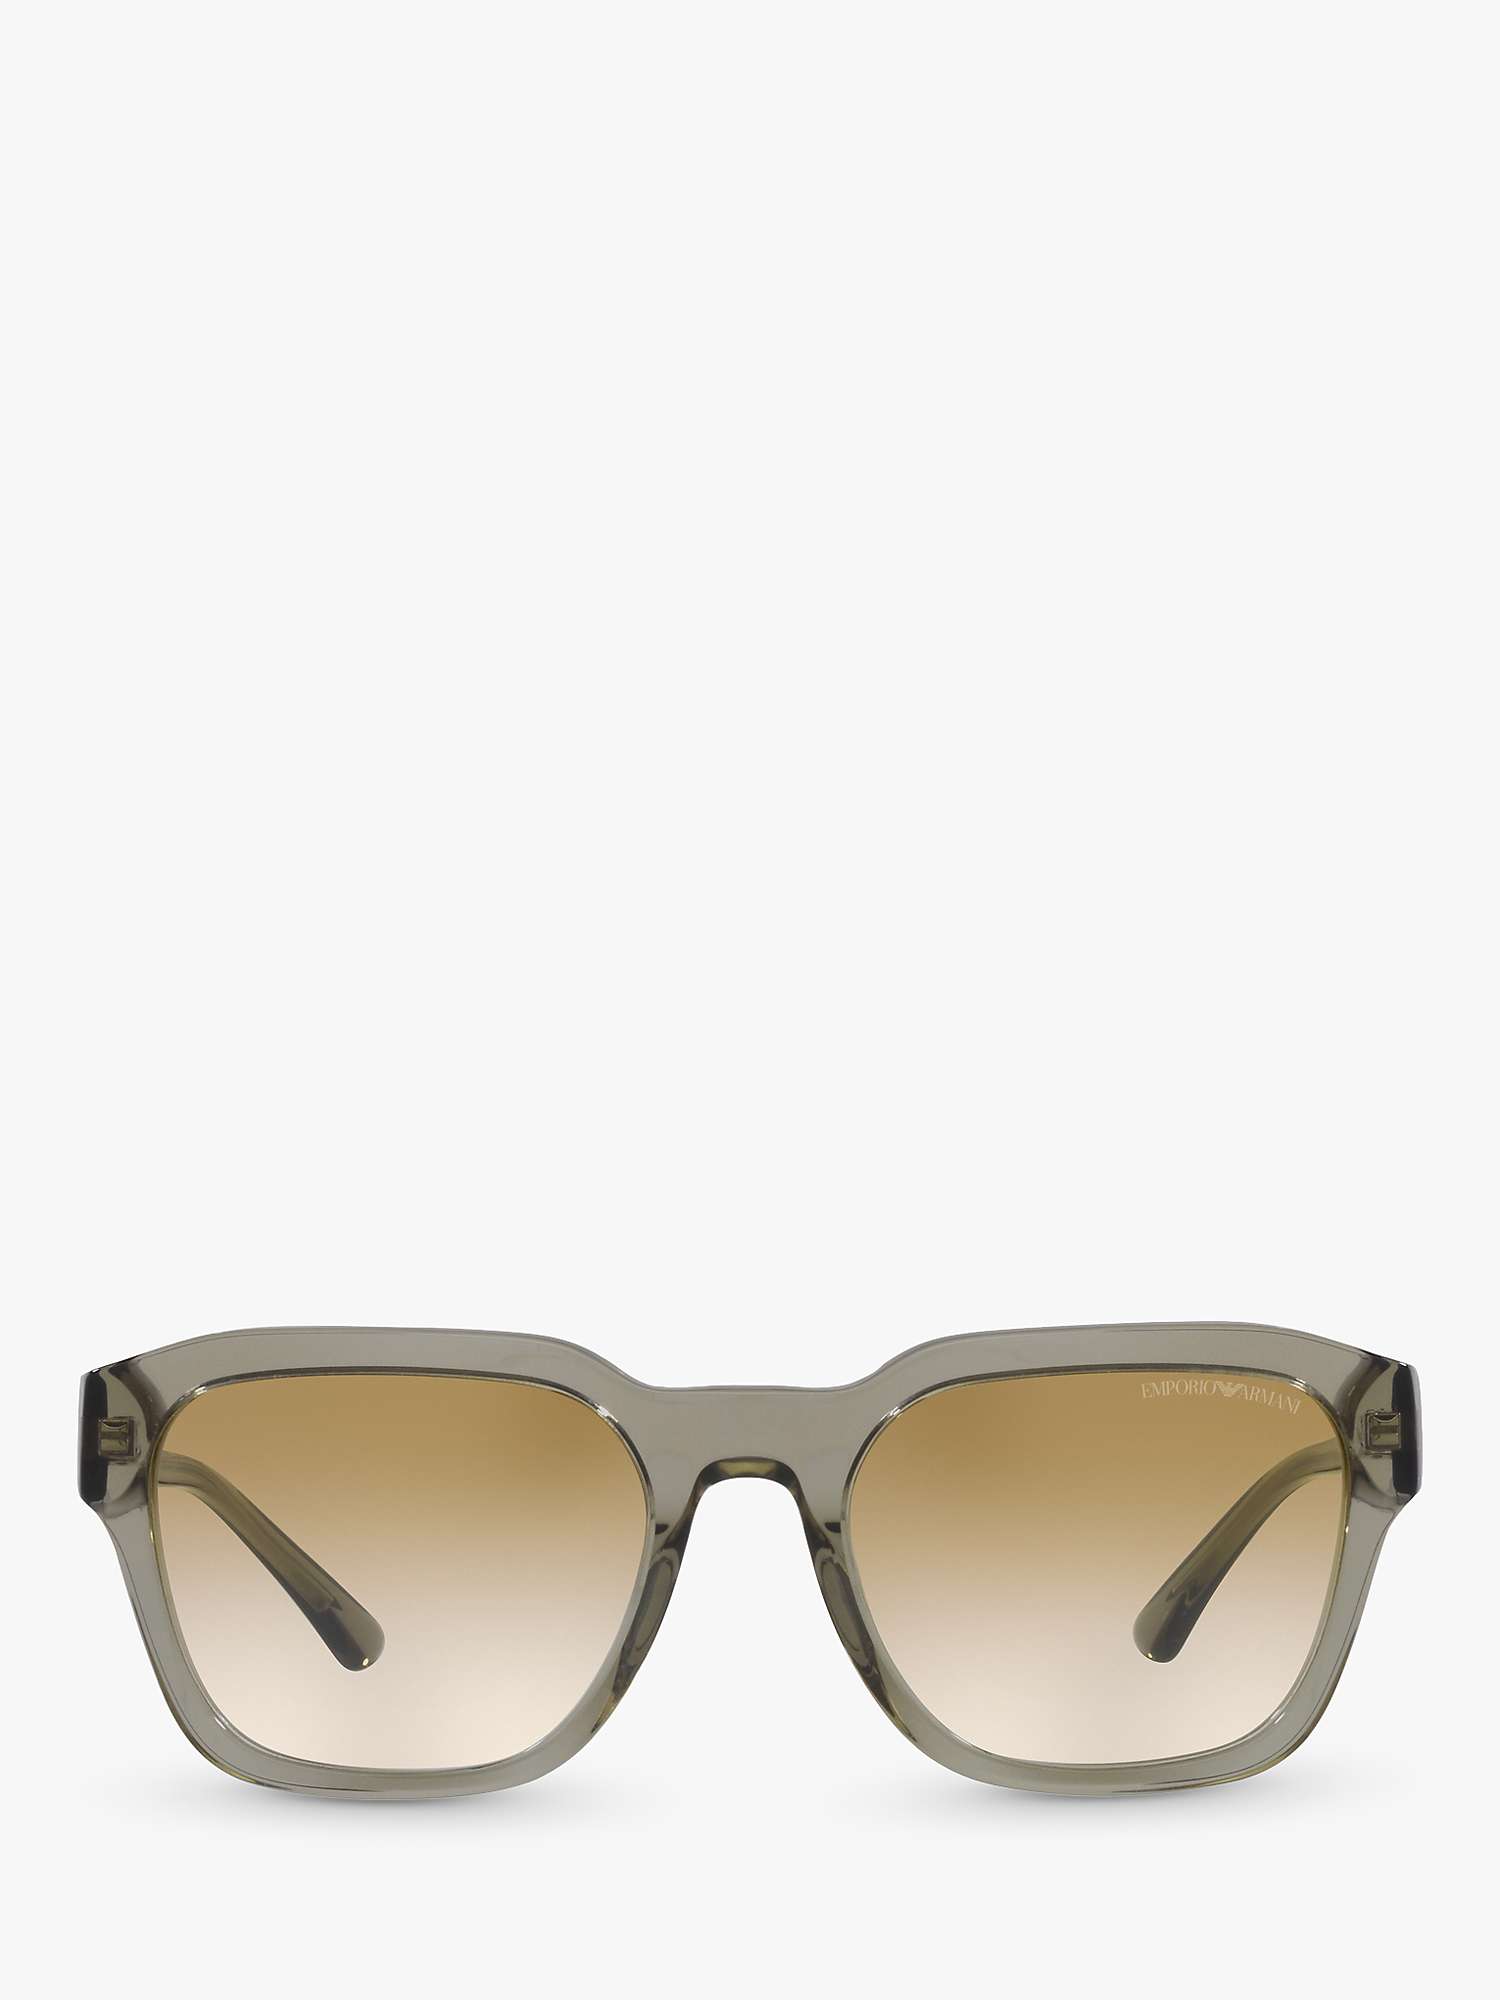 Buy Emporio Armani EA4175 Men's Square Sunglasses,Transparent Green/Brown Gradient Online at johnlewis.com